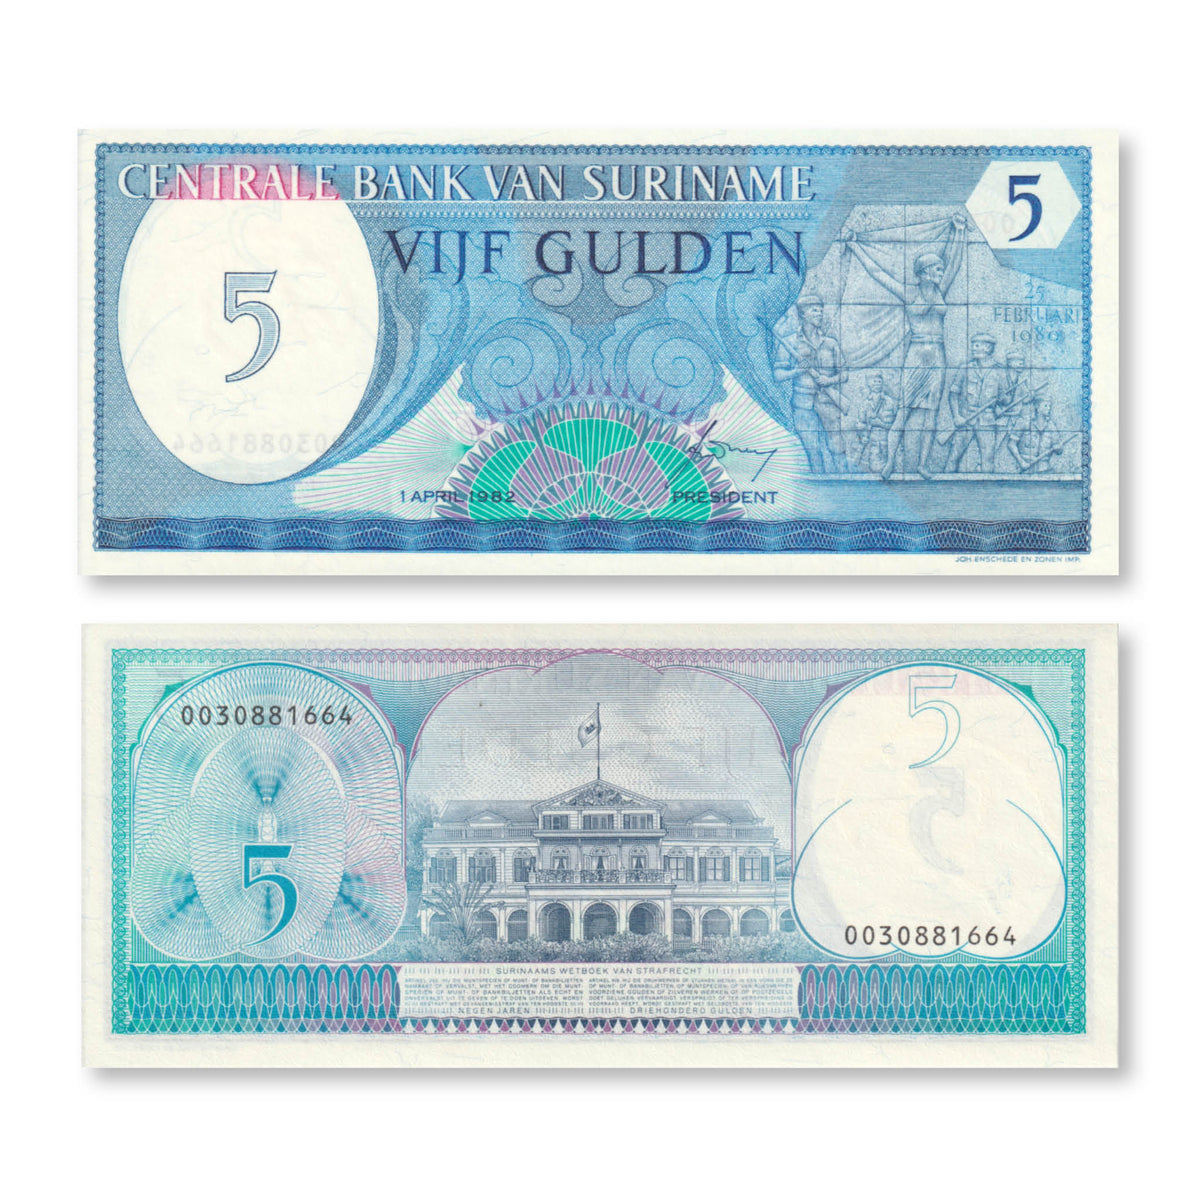 Suriname 5 Gulden, 1982, B511a, P125, UNC - Robert's World Money - World Banknotes